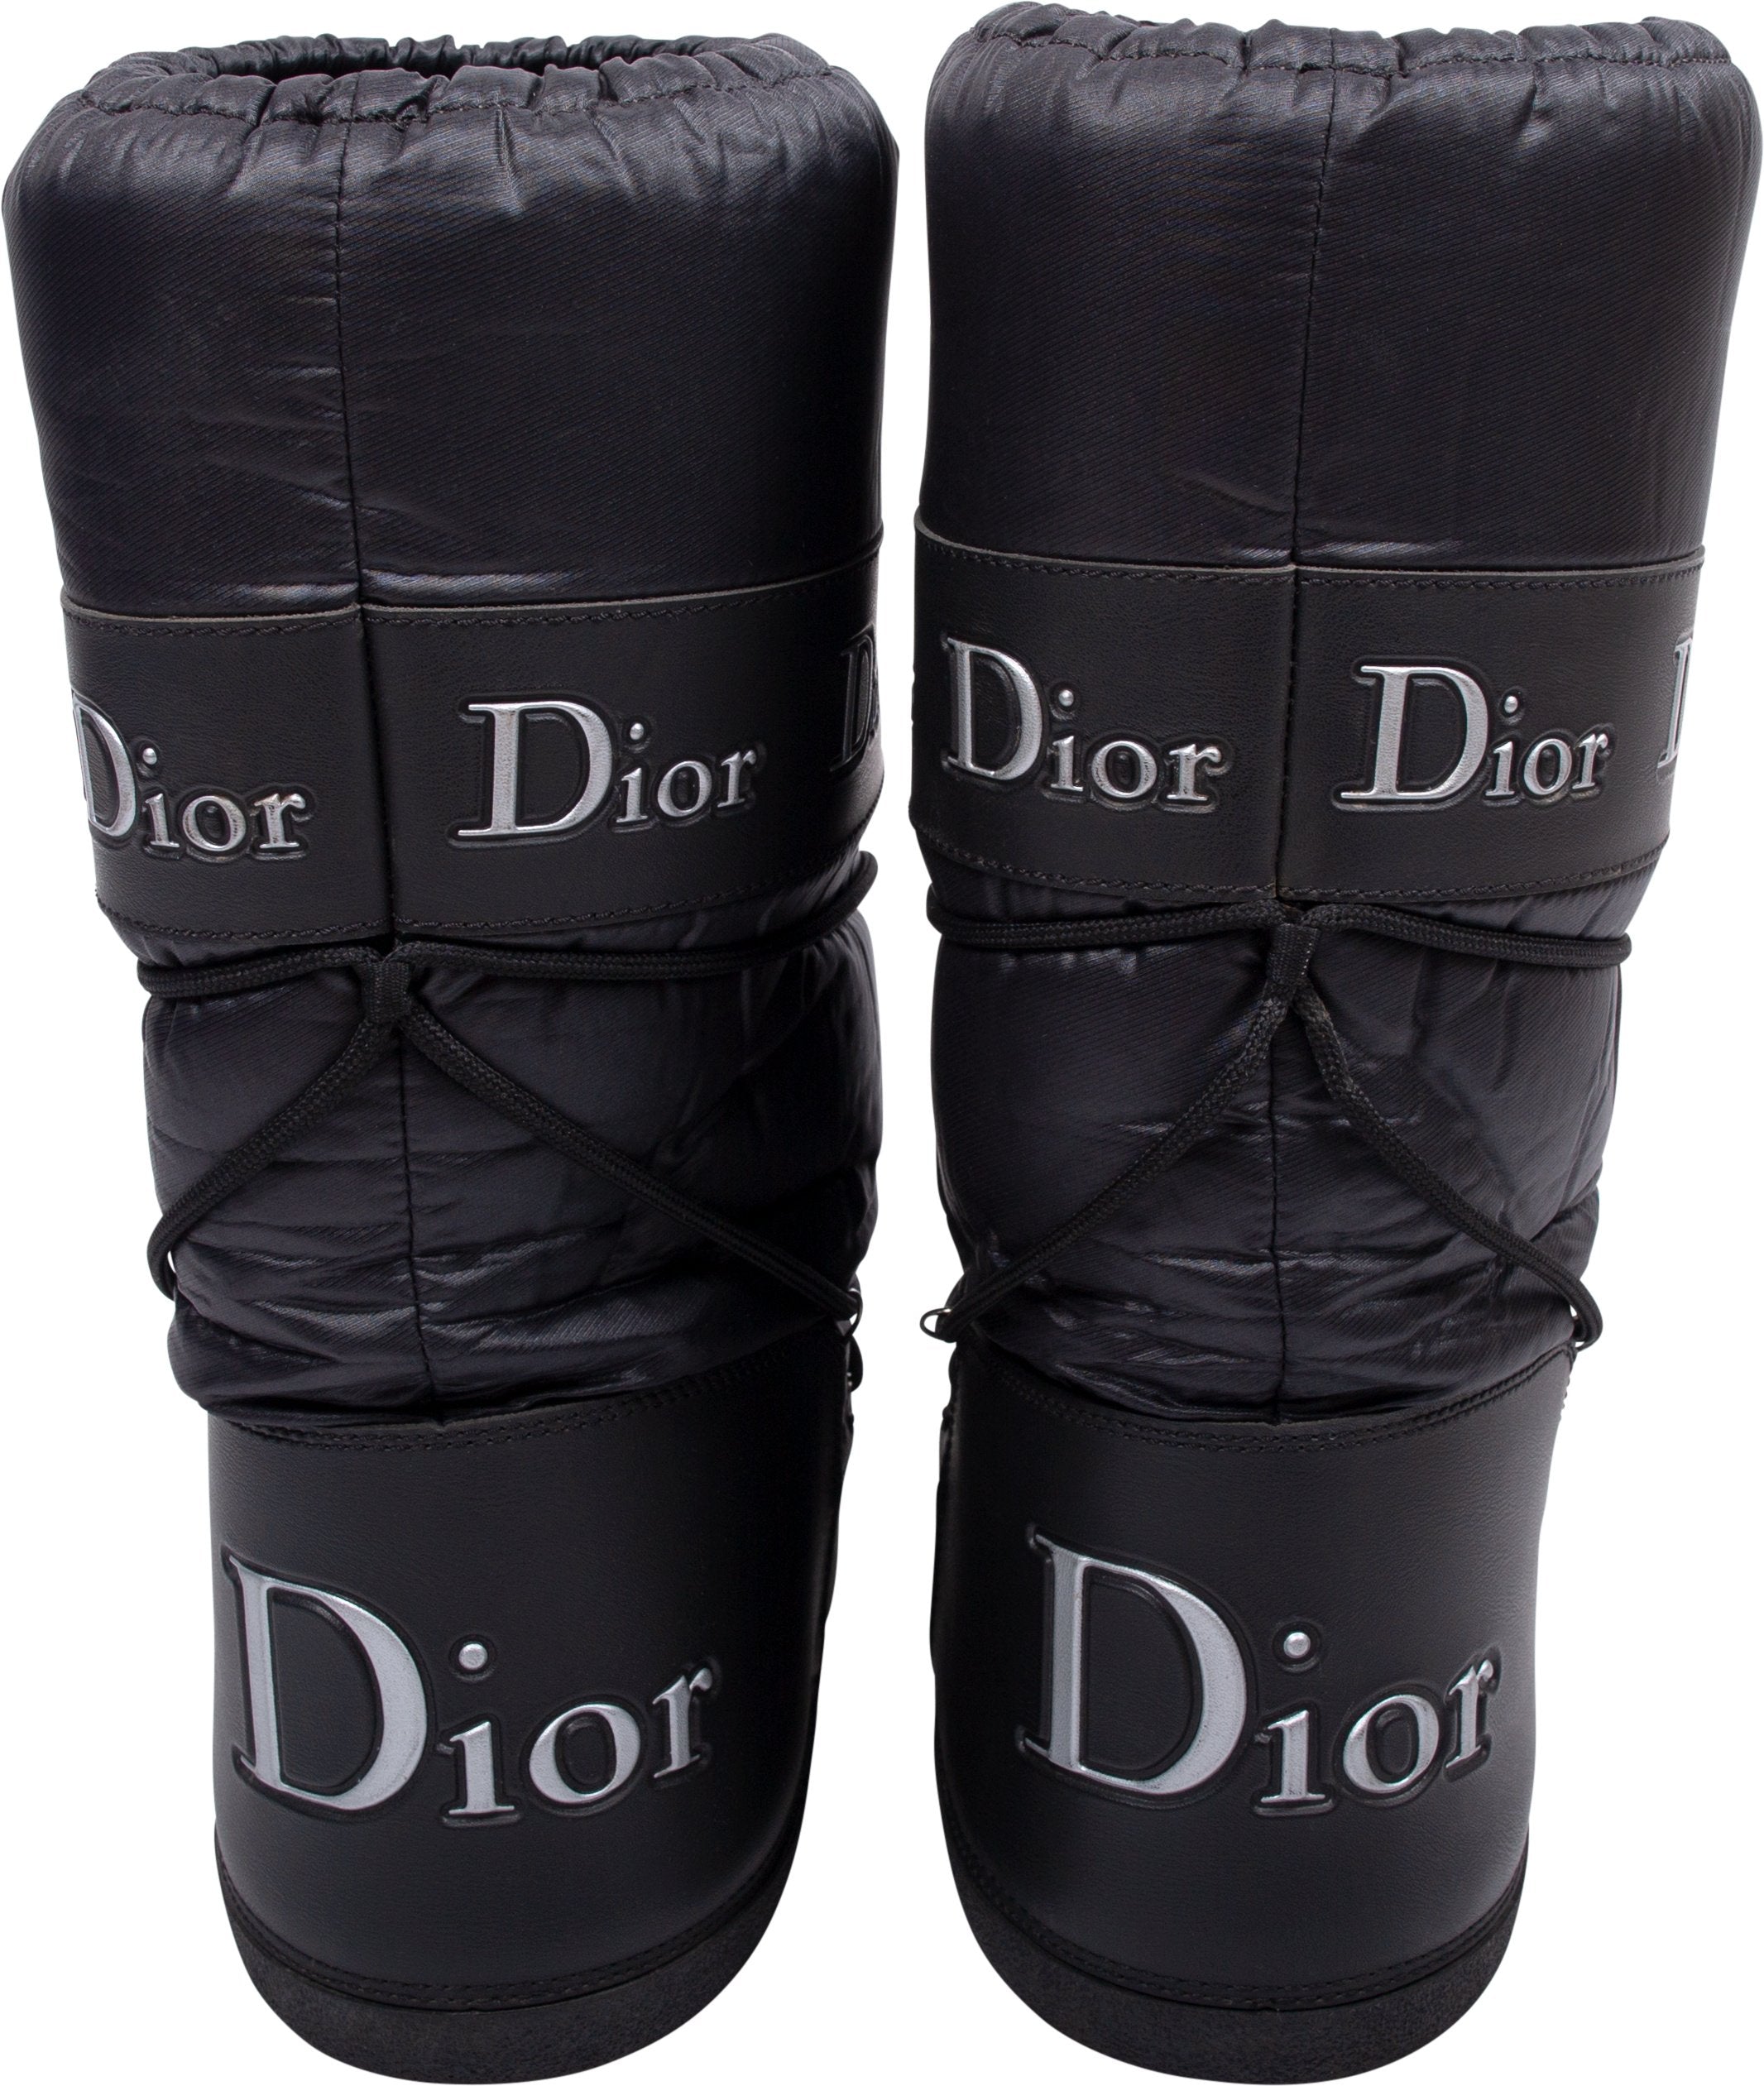 Christian Dior Black Moon Boots | EL CYCER